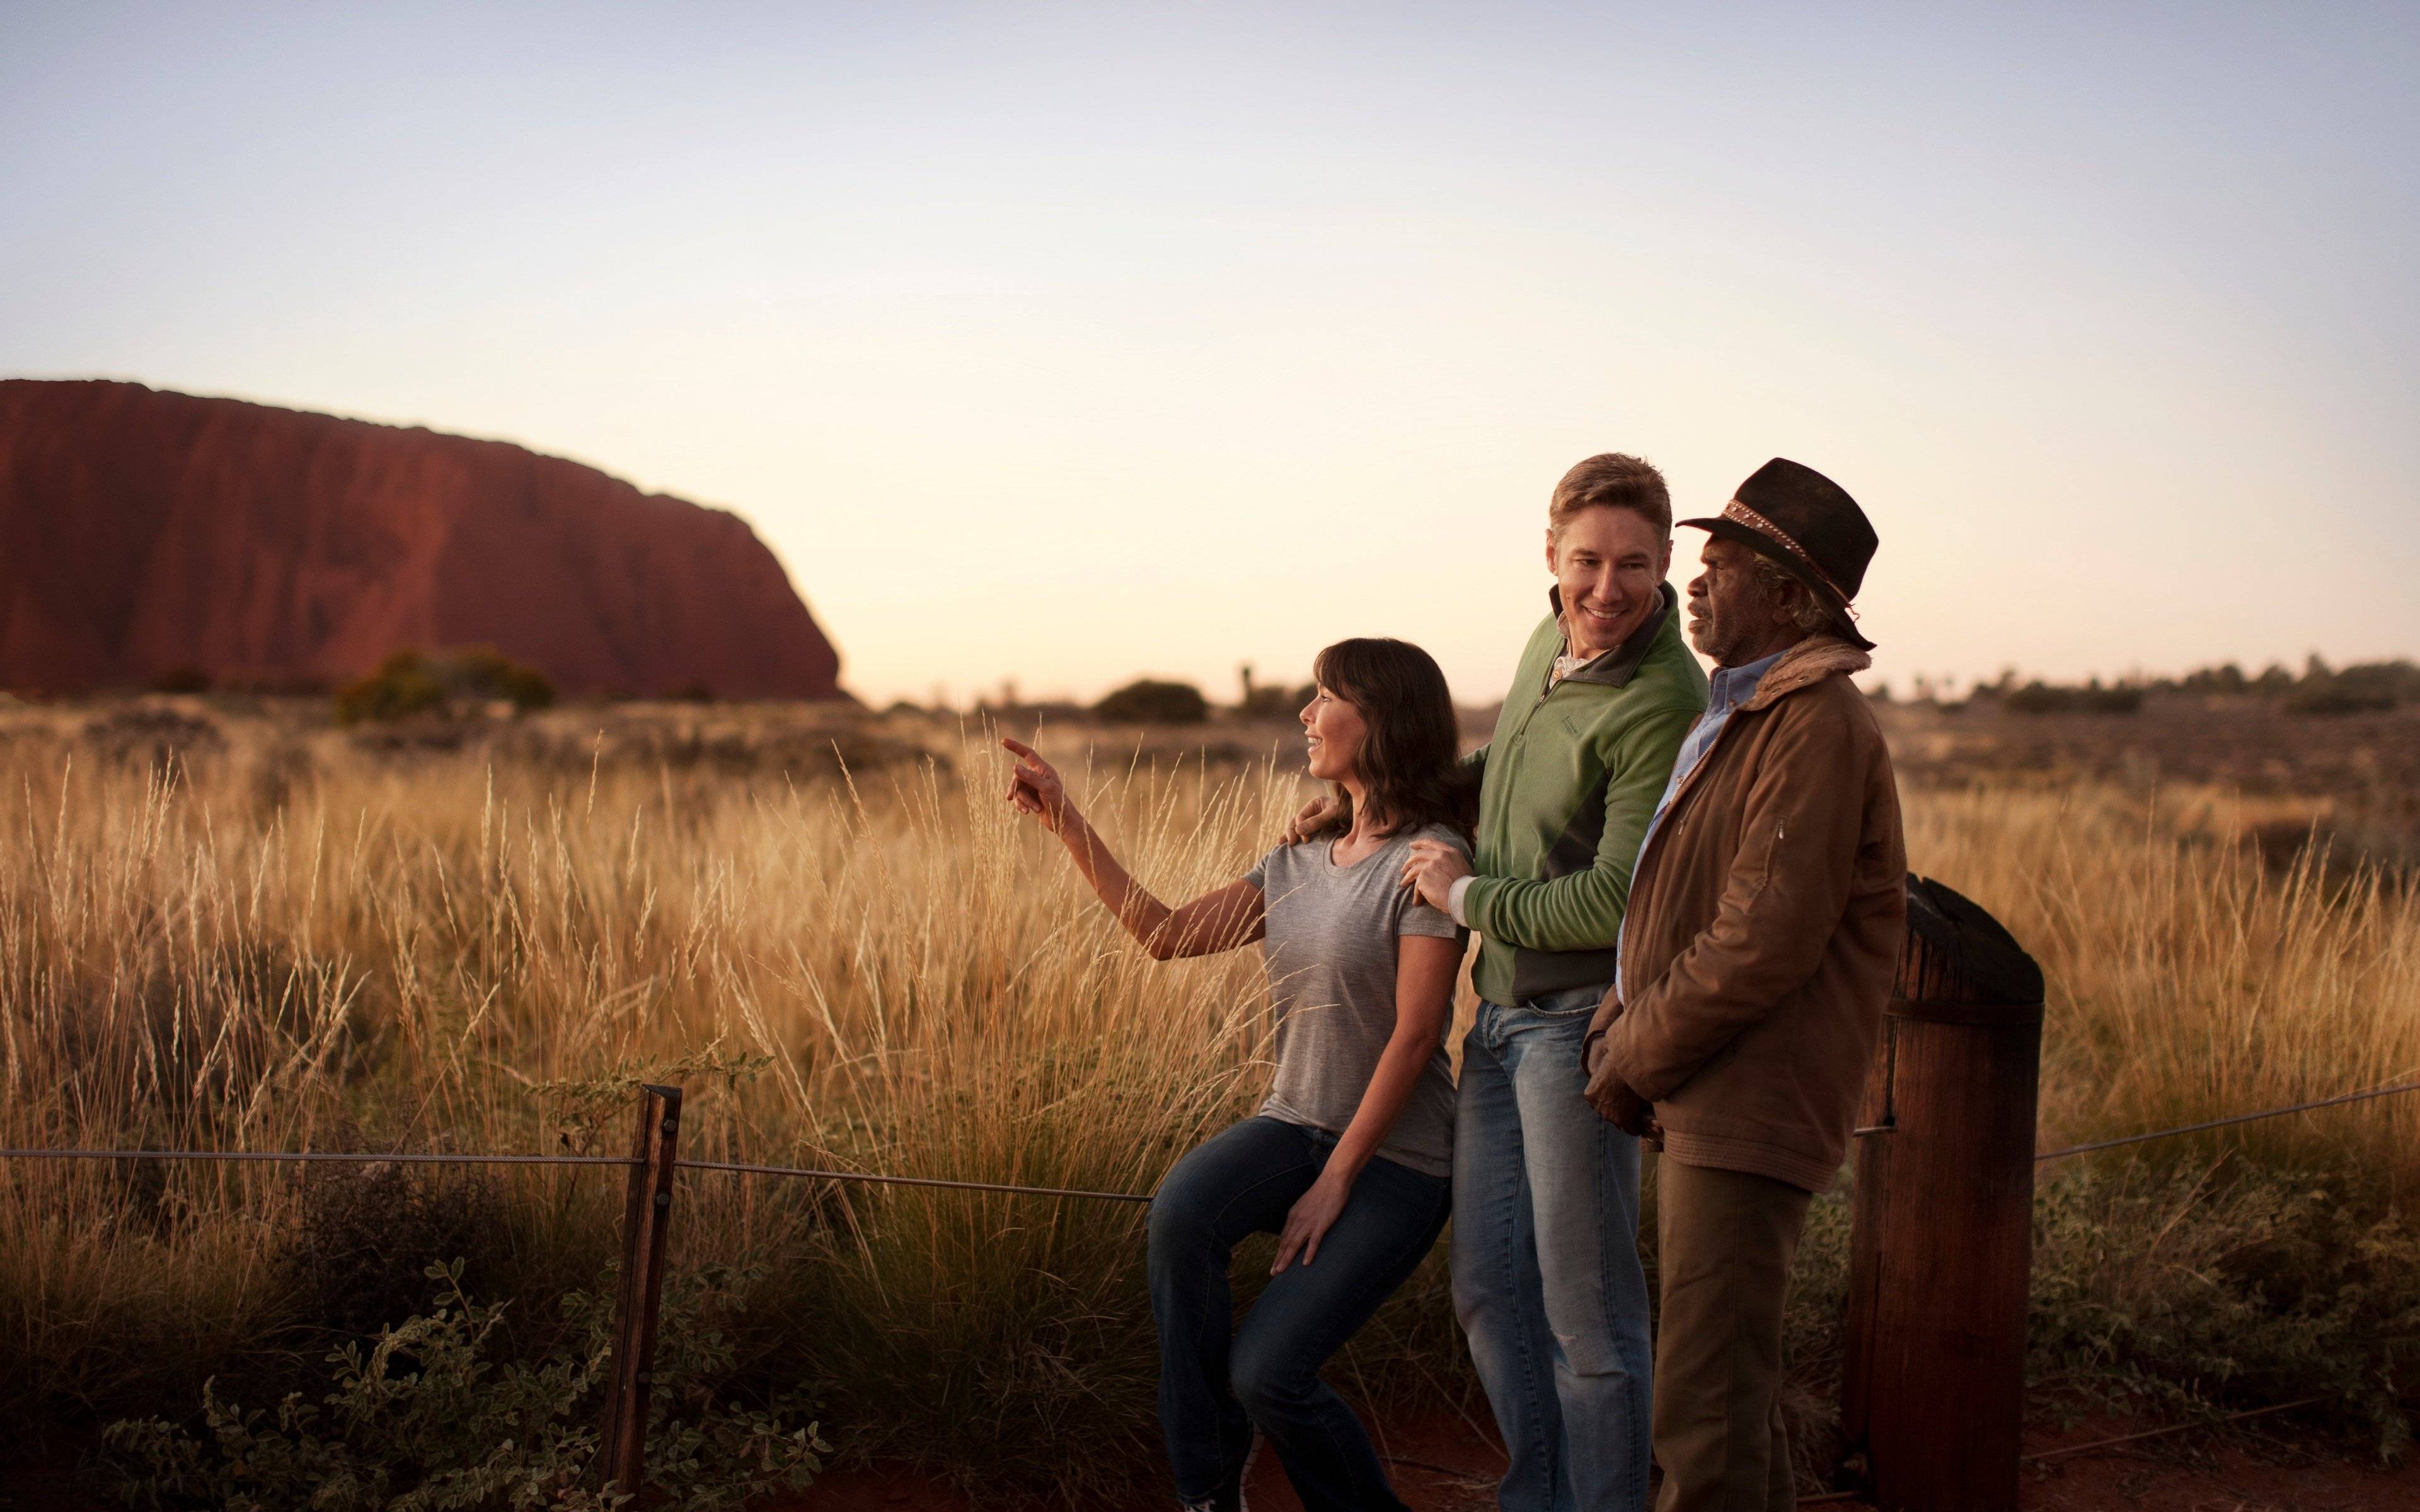 Les alentours d'Uluru avec son peuple aborigène